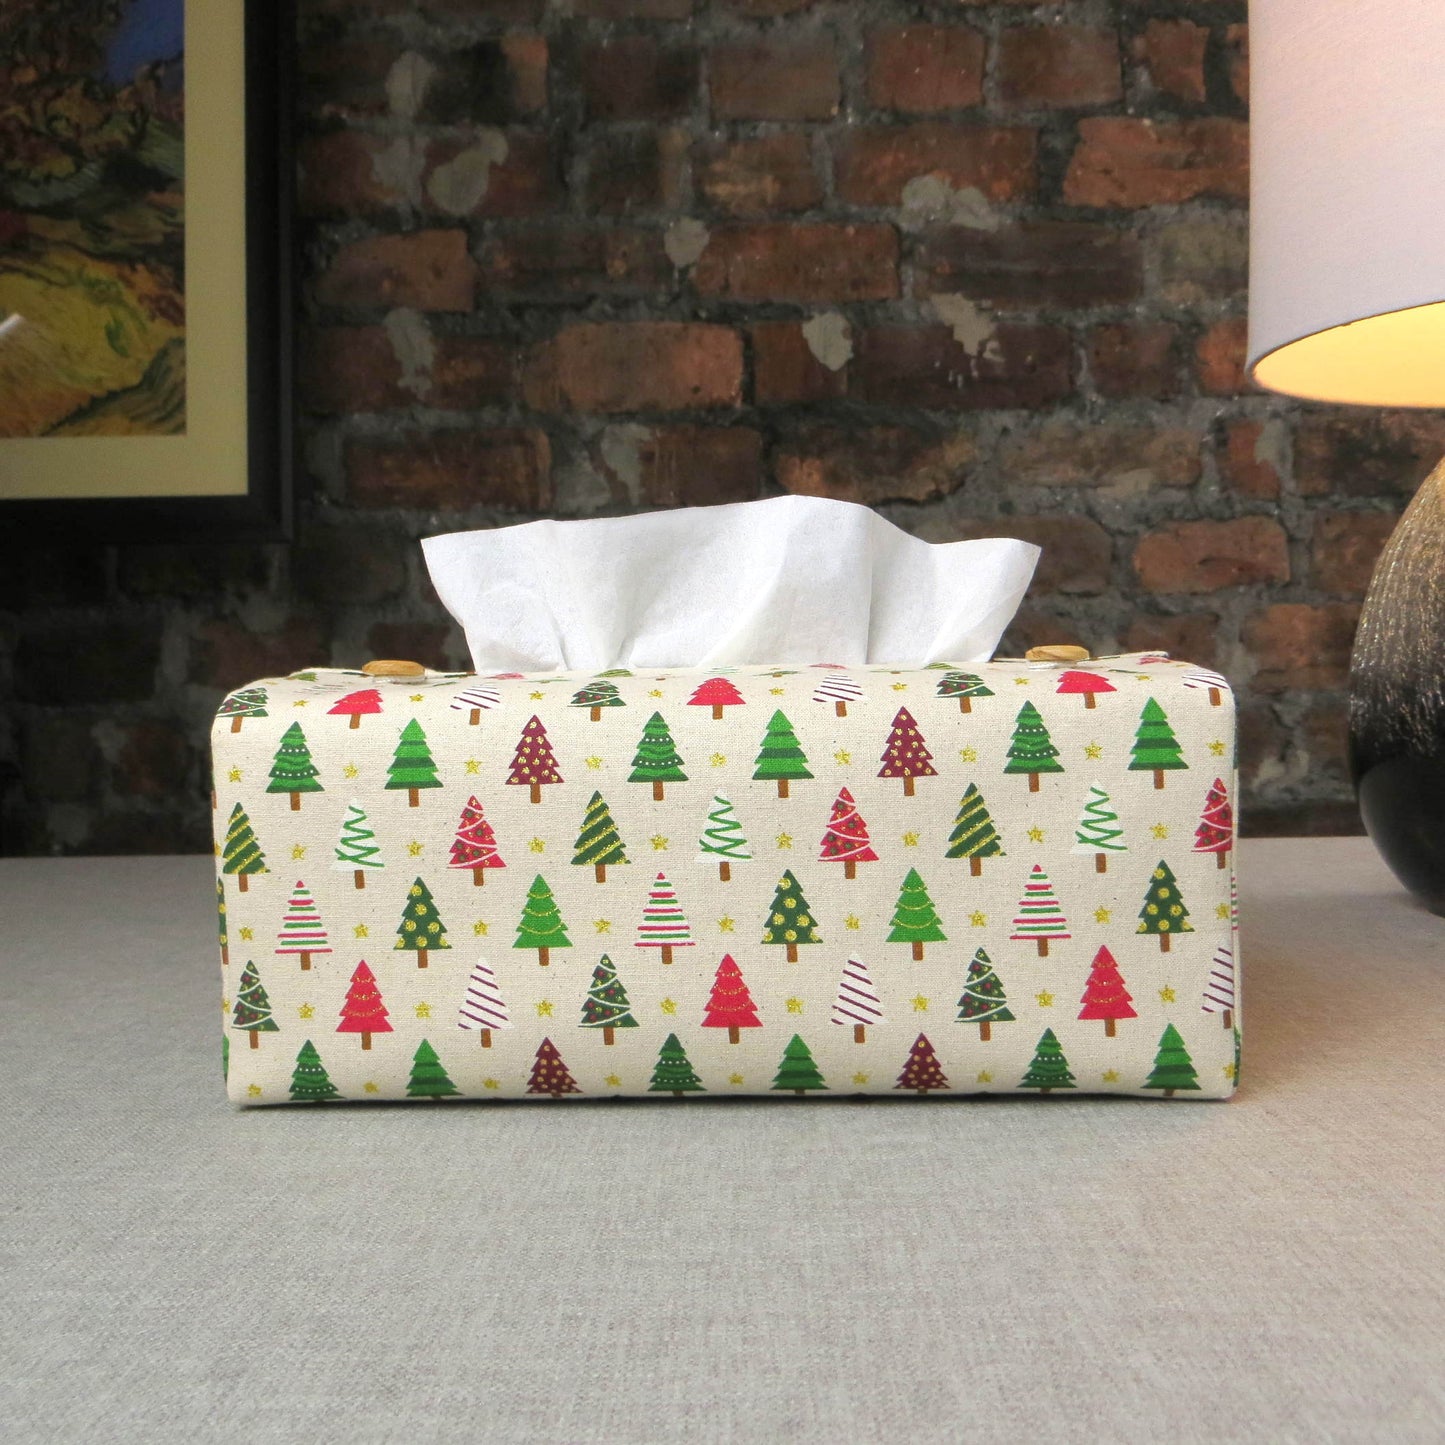 Rectangular Fabric Tissue Box Cover - Decorated Trees Christmas Design